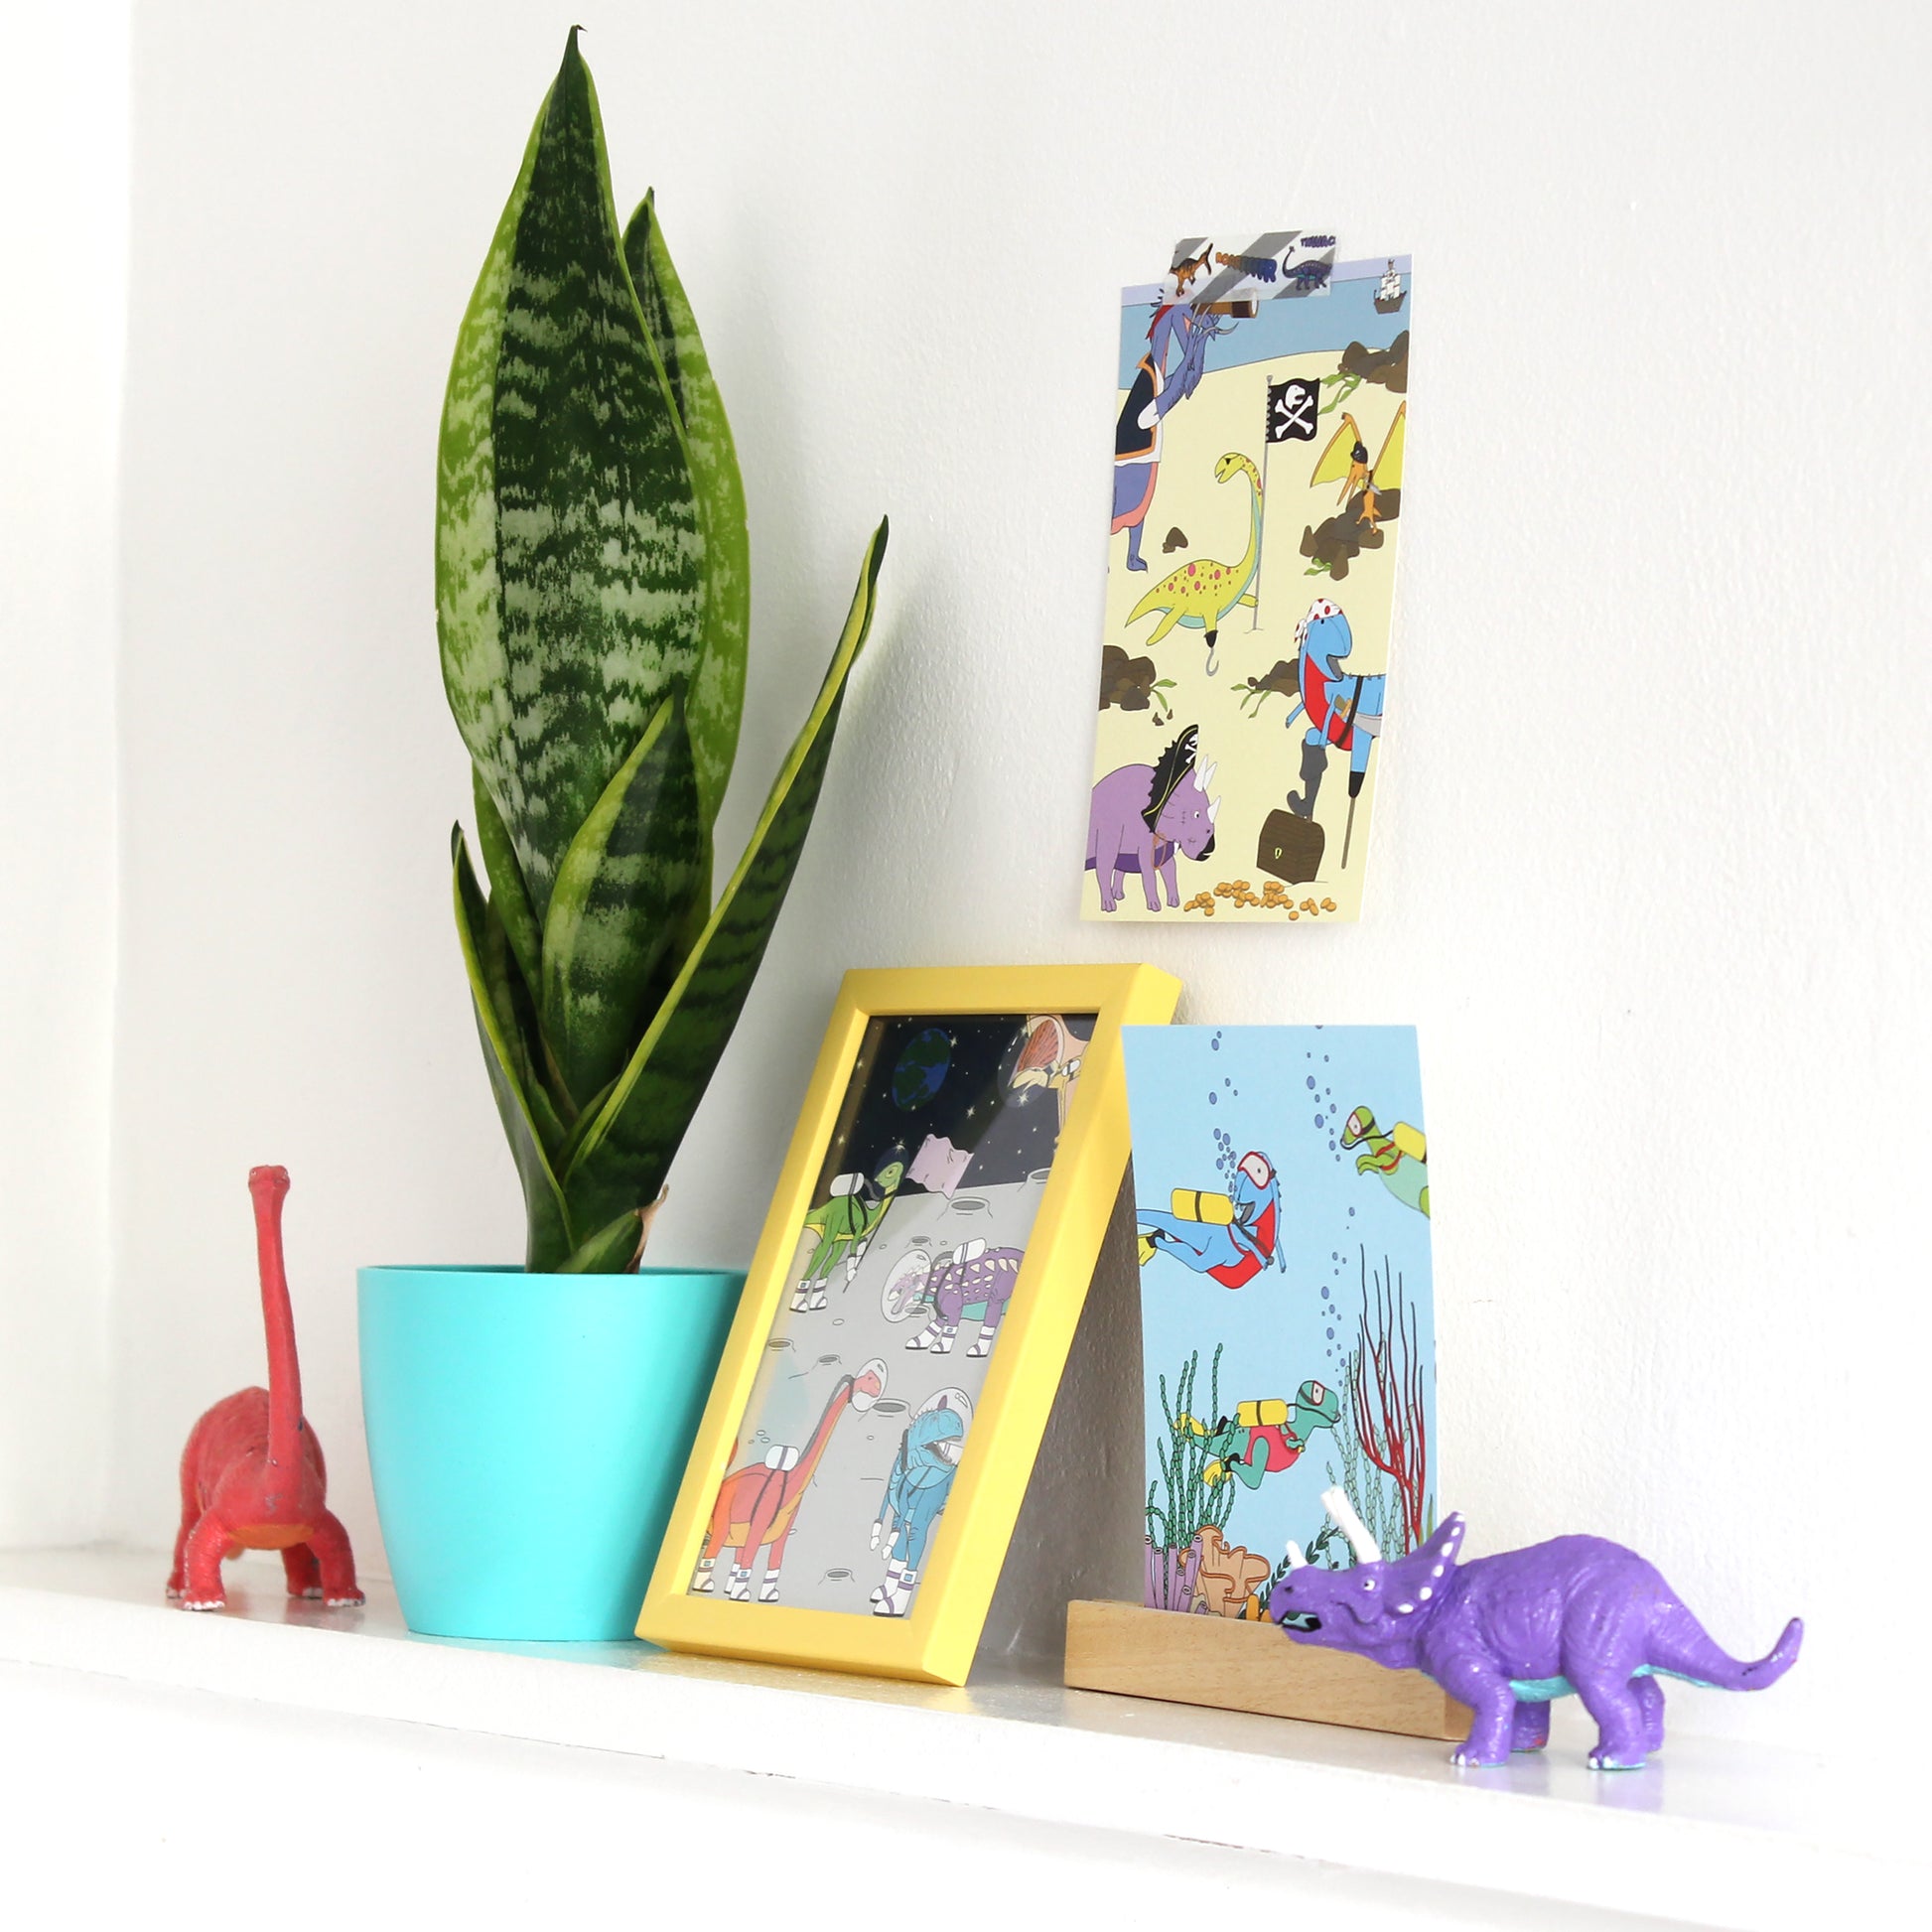 3 dinosaur postcards on a shelf with plants and dinosaur figurines 